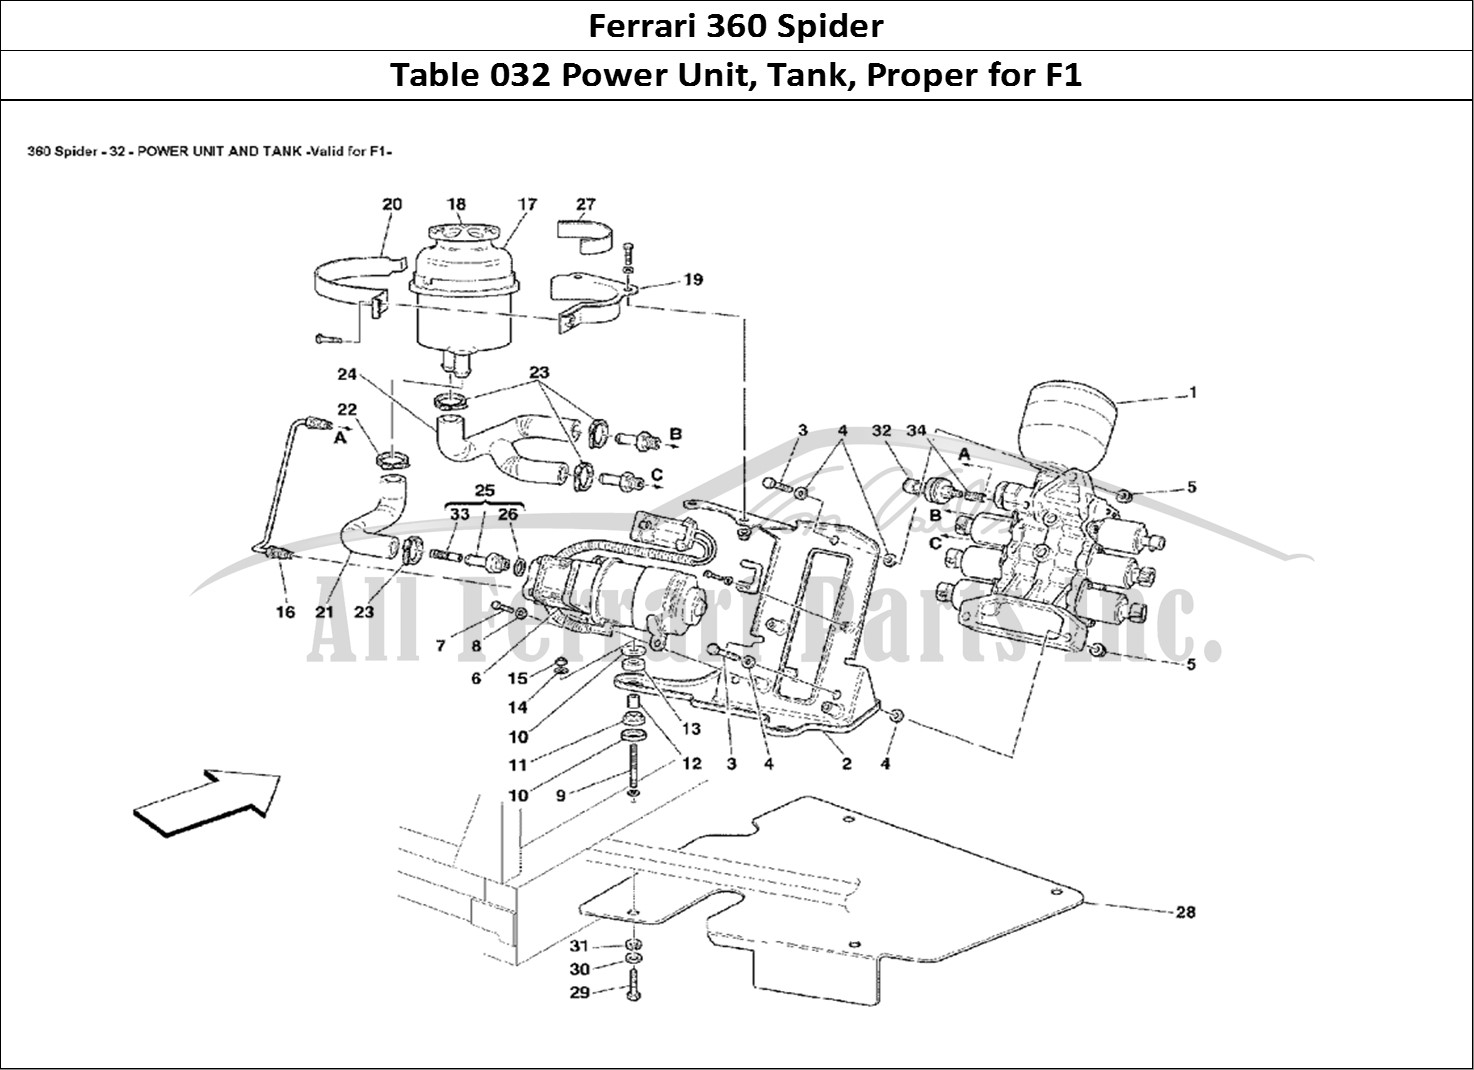 Ferrari Parts Ferrari 360 Spider Page 032 Power Unit and Tank - Val